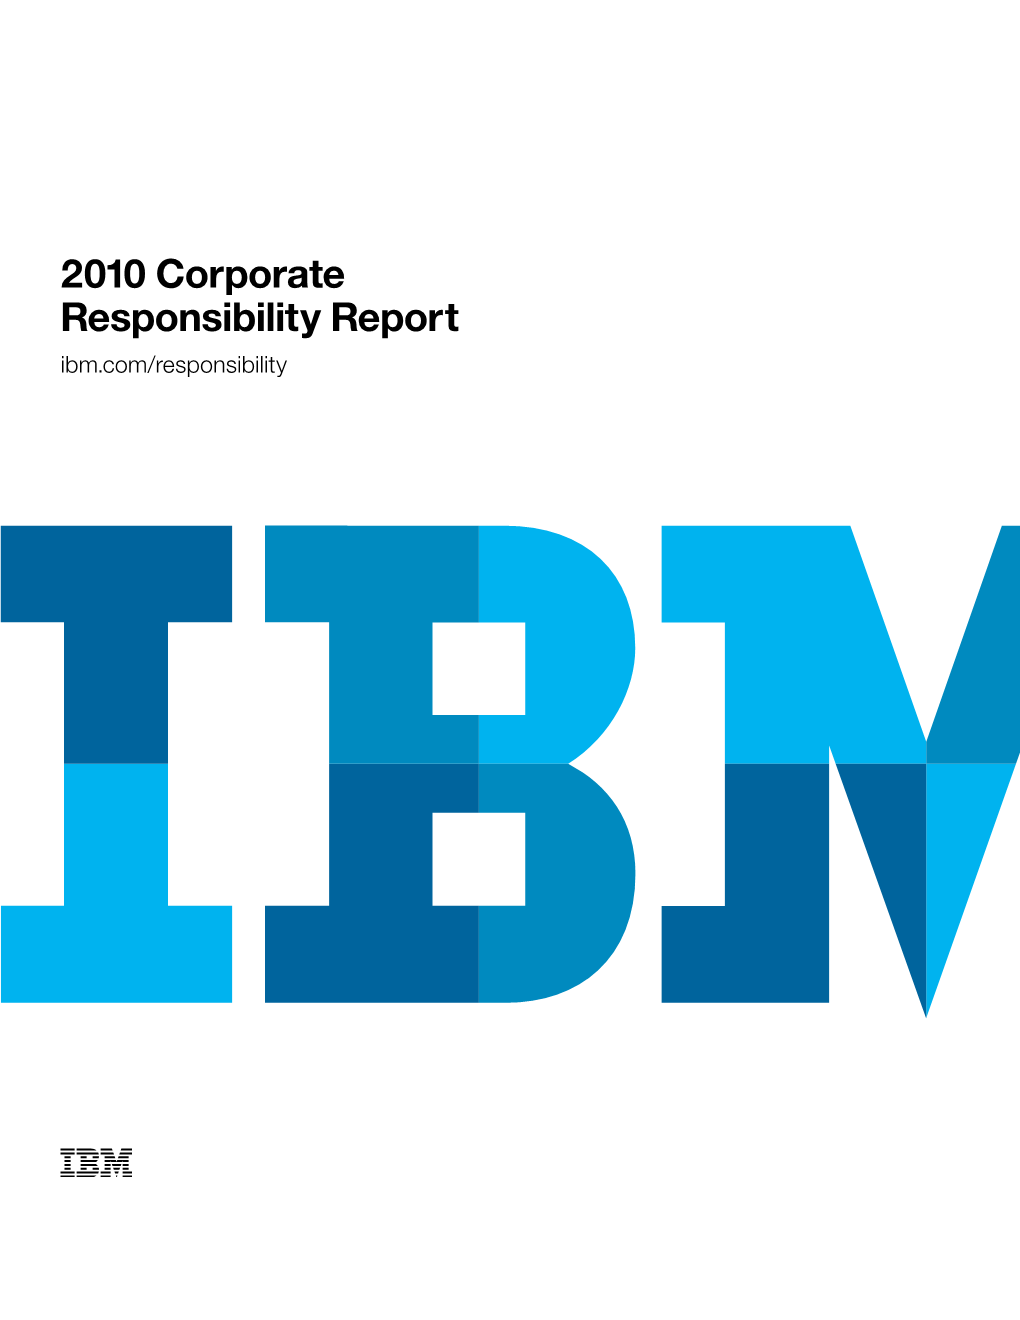 IBM 2010 Corporate Responsibility Report